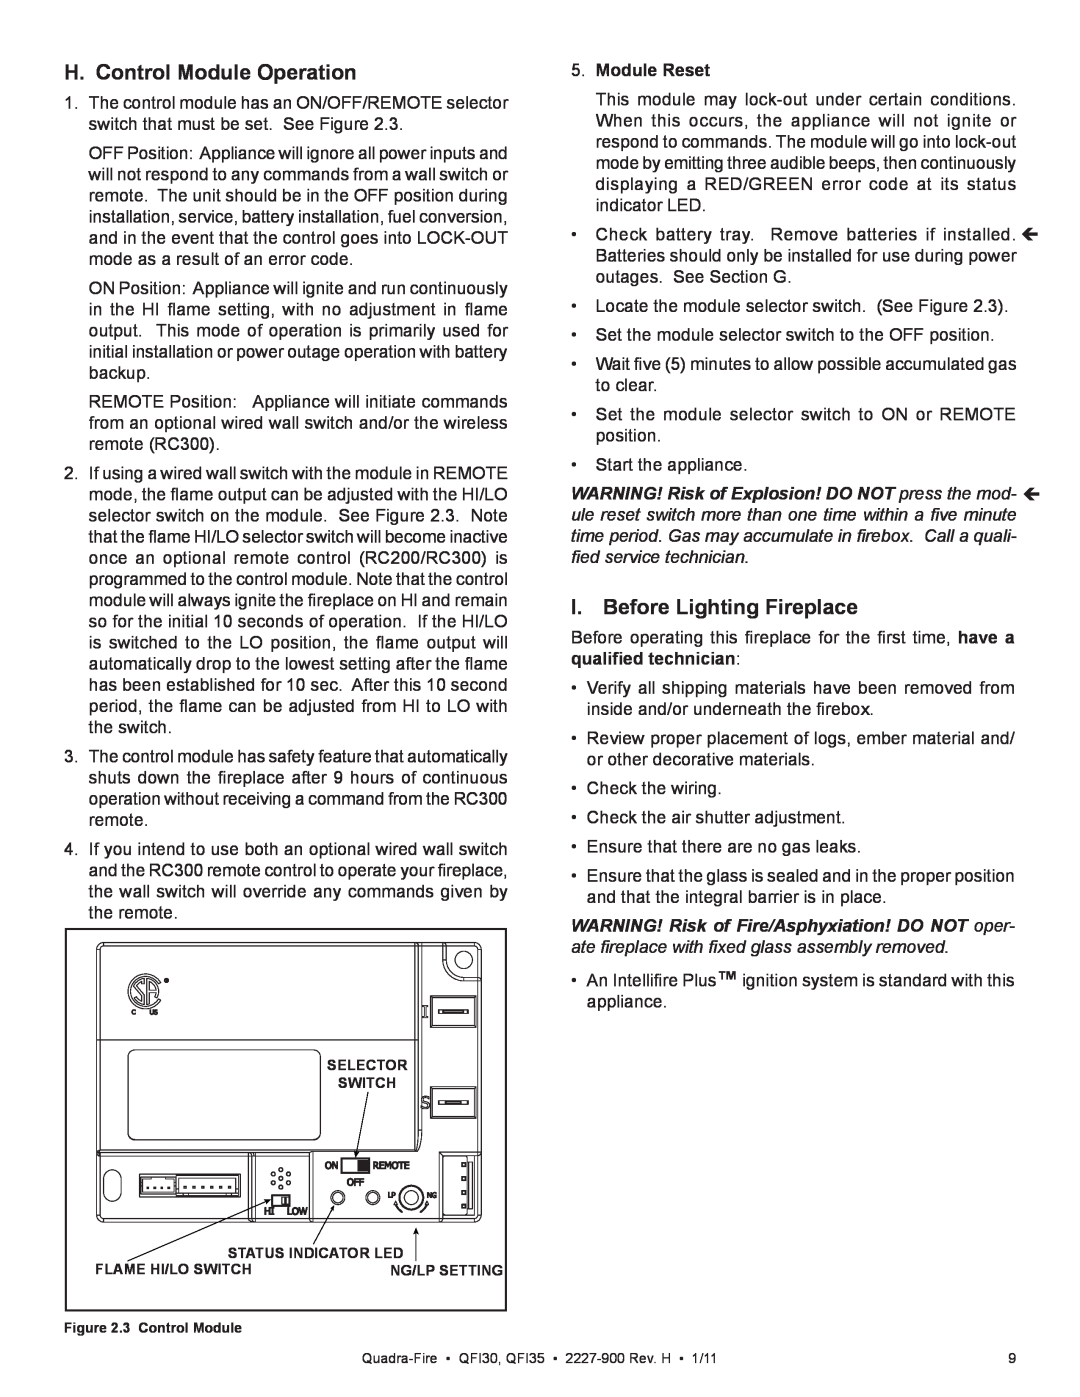 Quadra-Fire QF130 owner manual H. Control Module Operation, I. Before Lighting Fireplace, Module Reset 